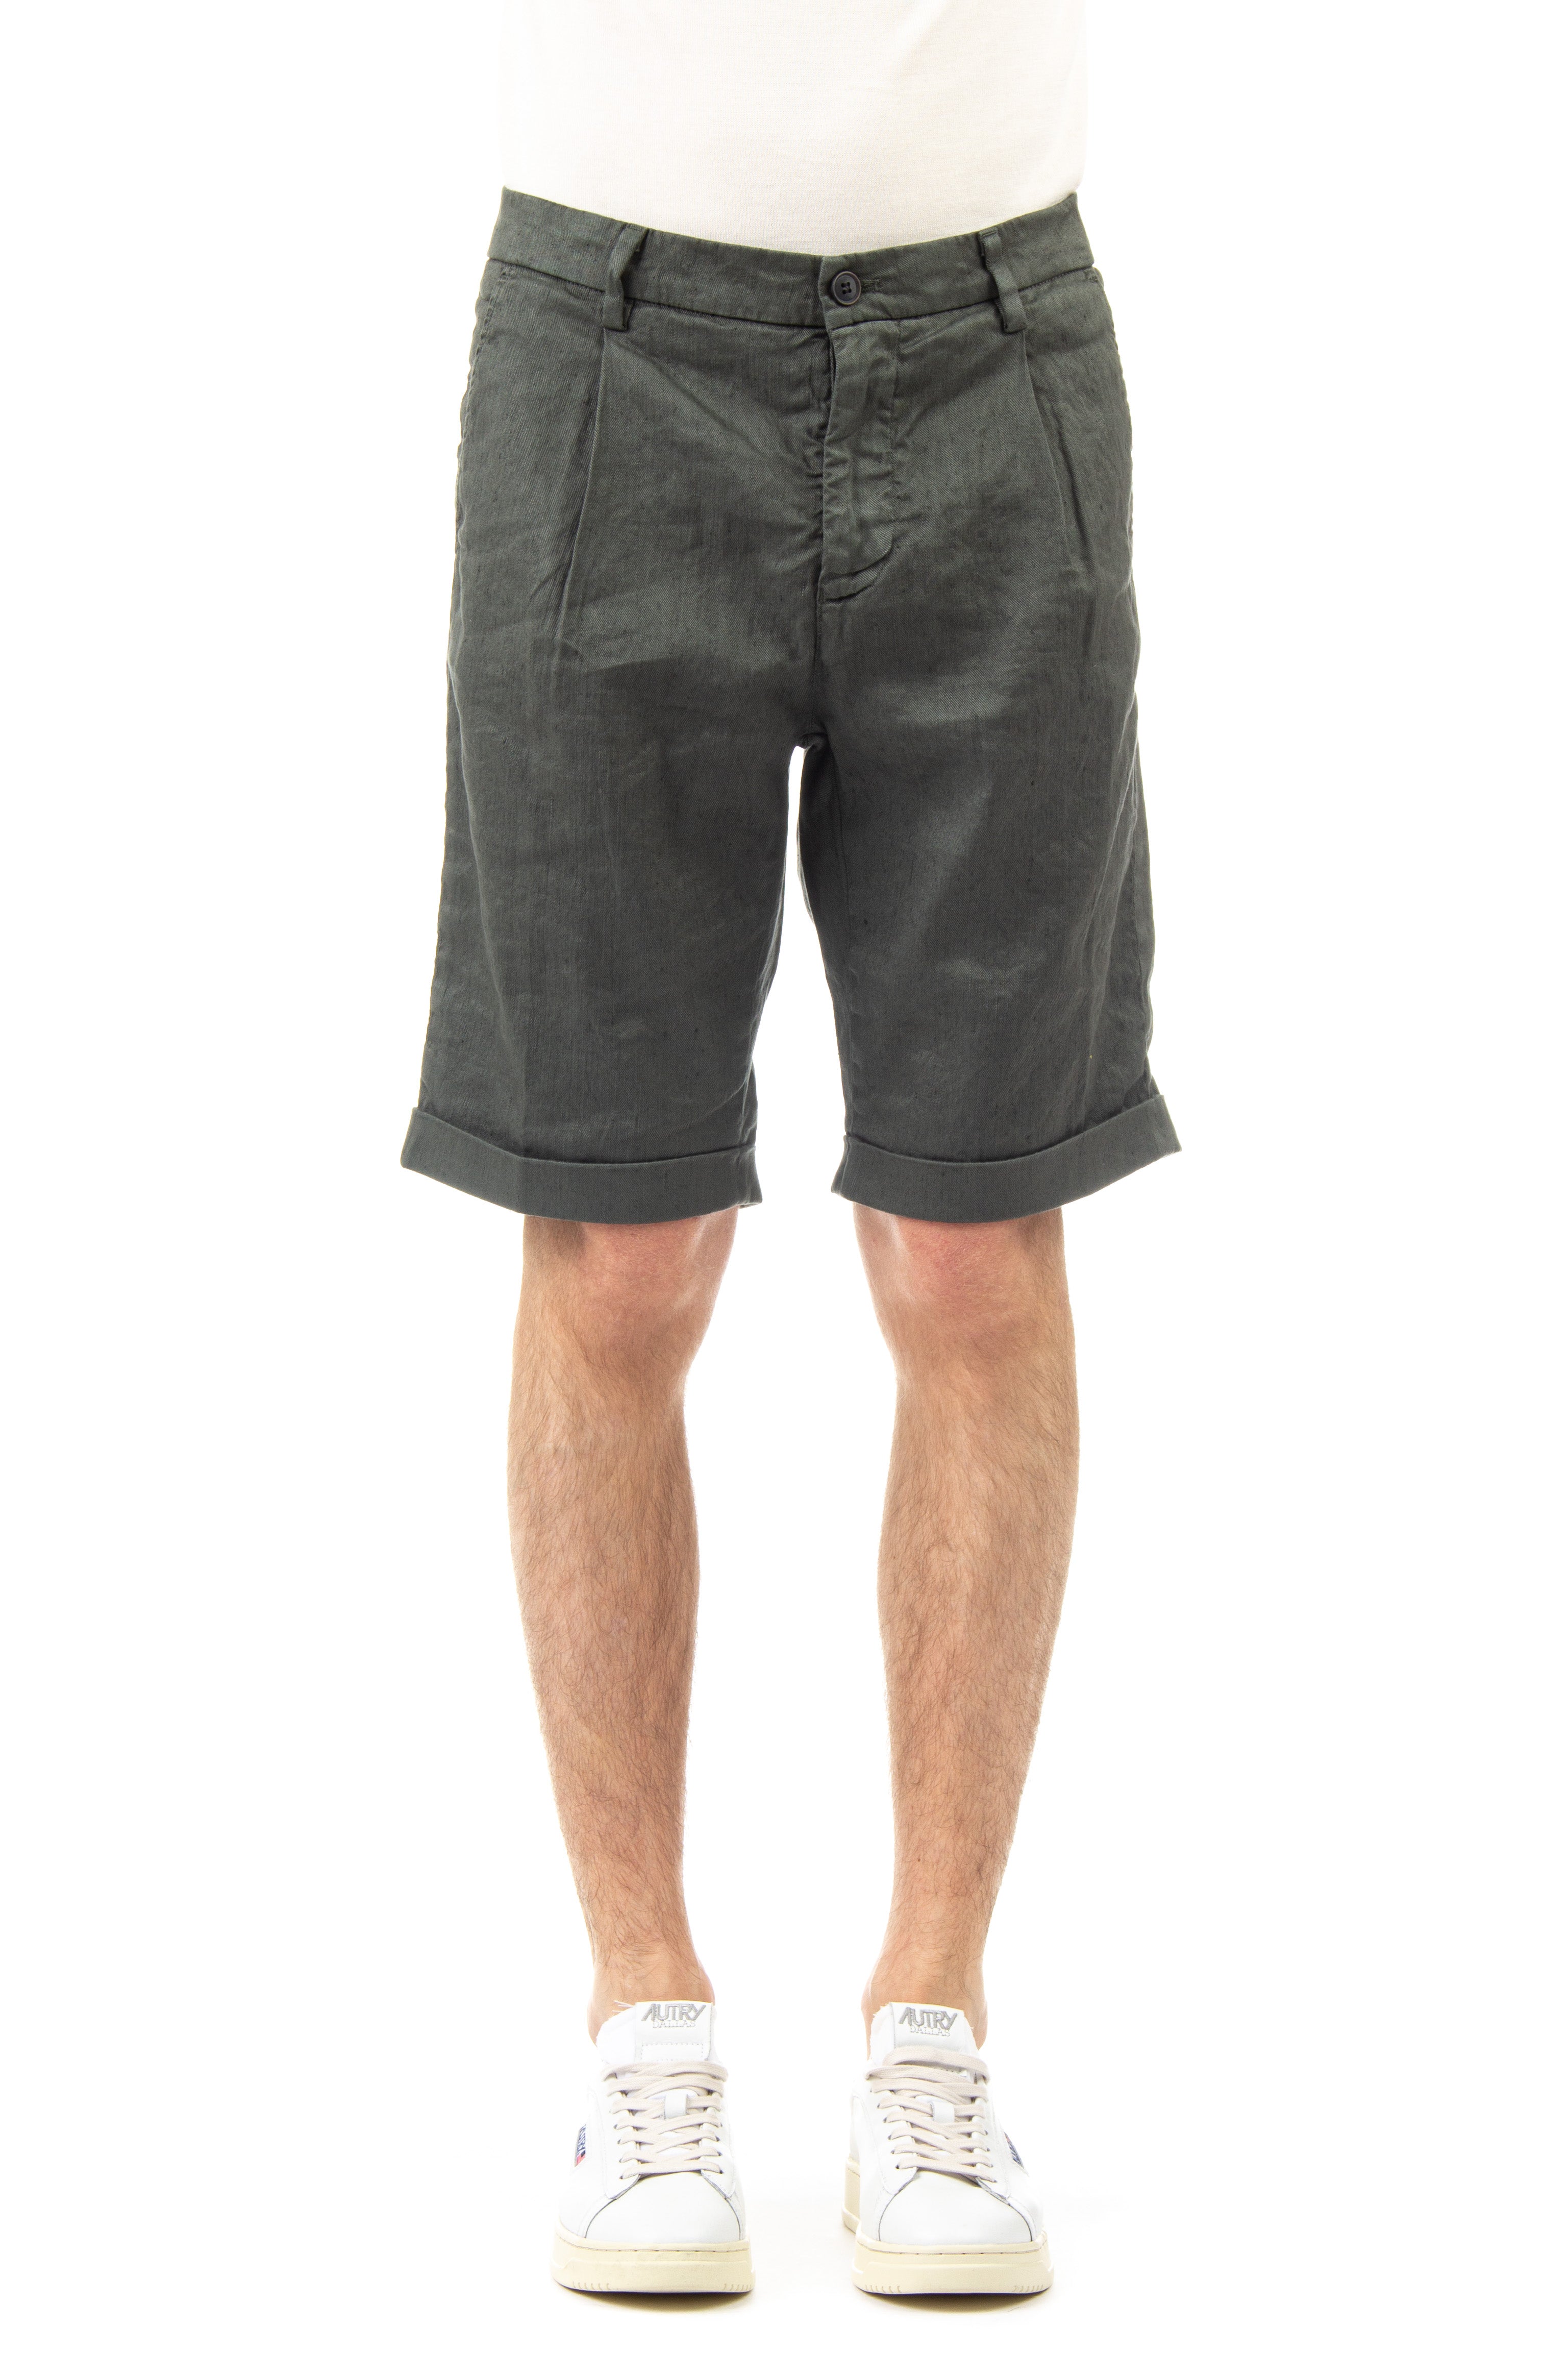 Amalfi model linen-cotton Bermuda shorts